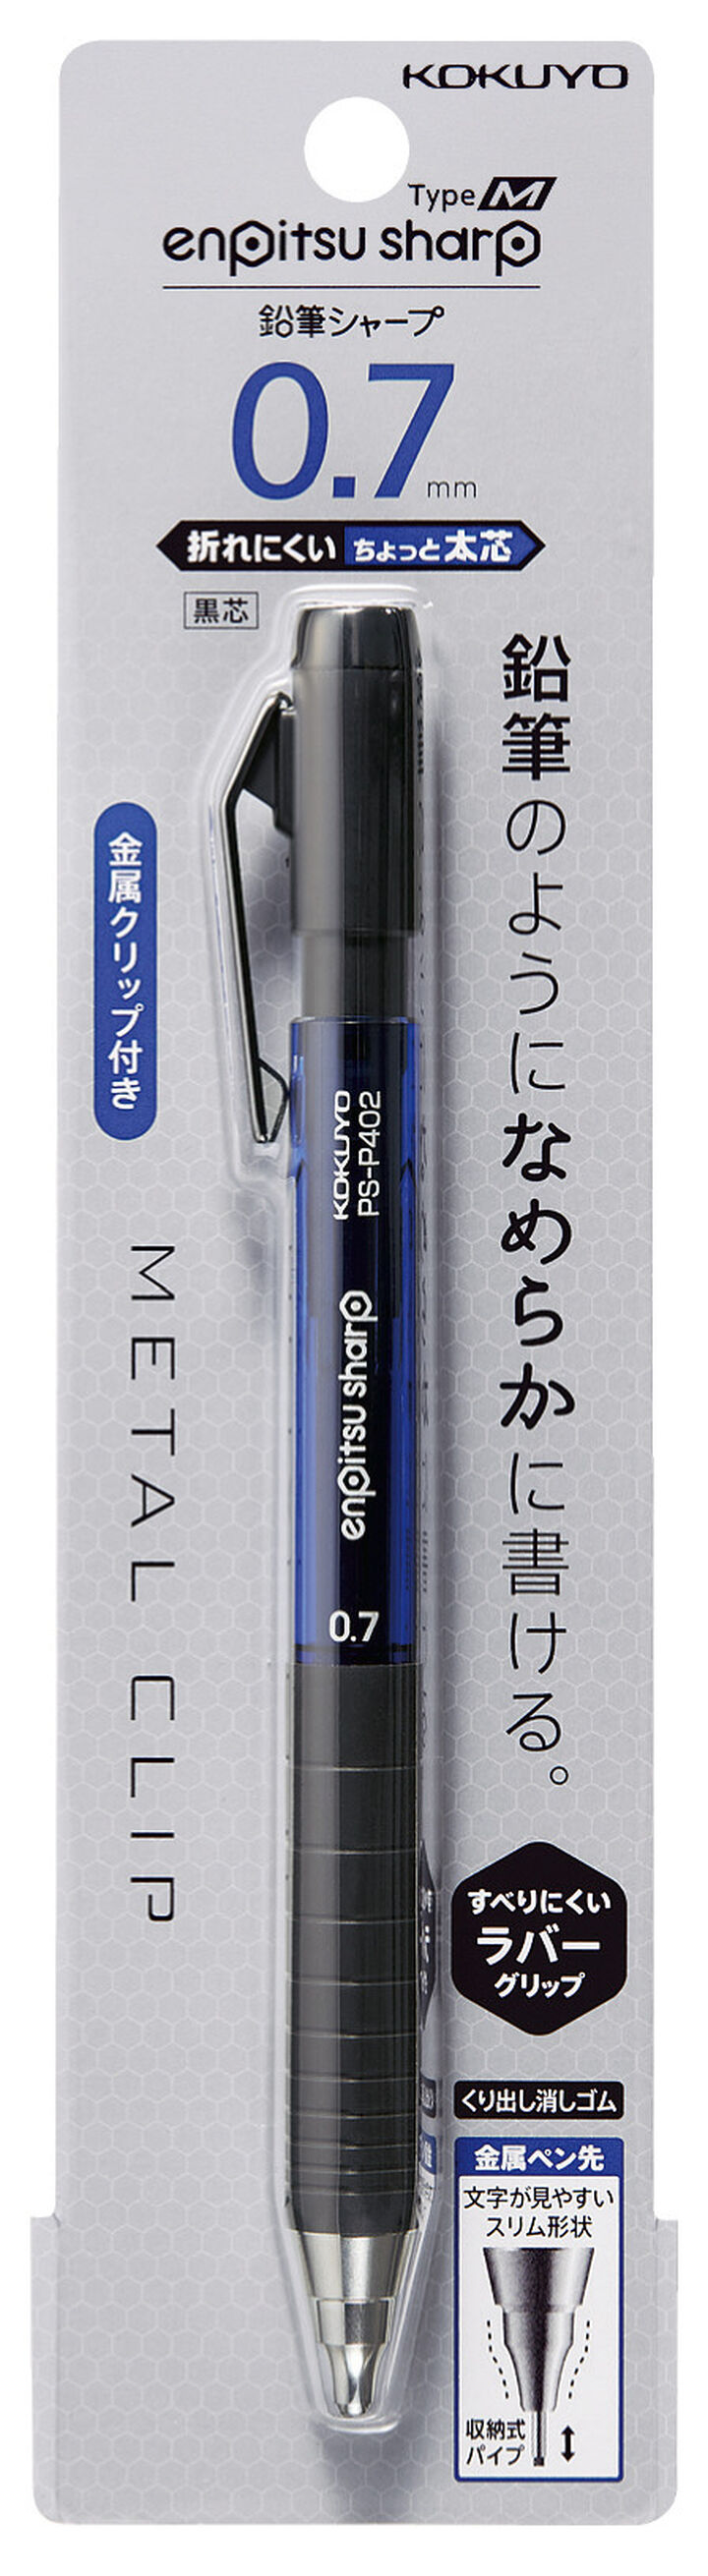 Enpitsu sharp mechanical pencil TypeM 0.7mm  Rubber Grip,Blue, medium